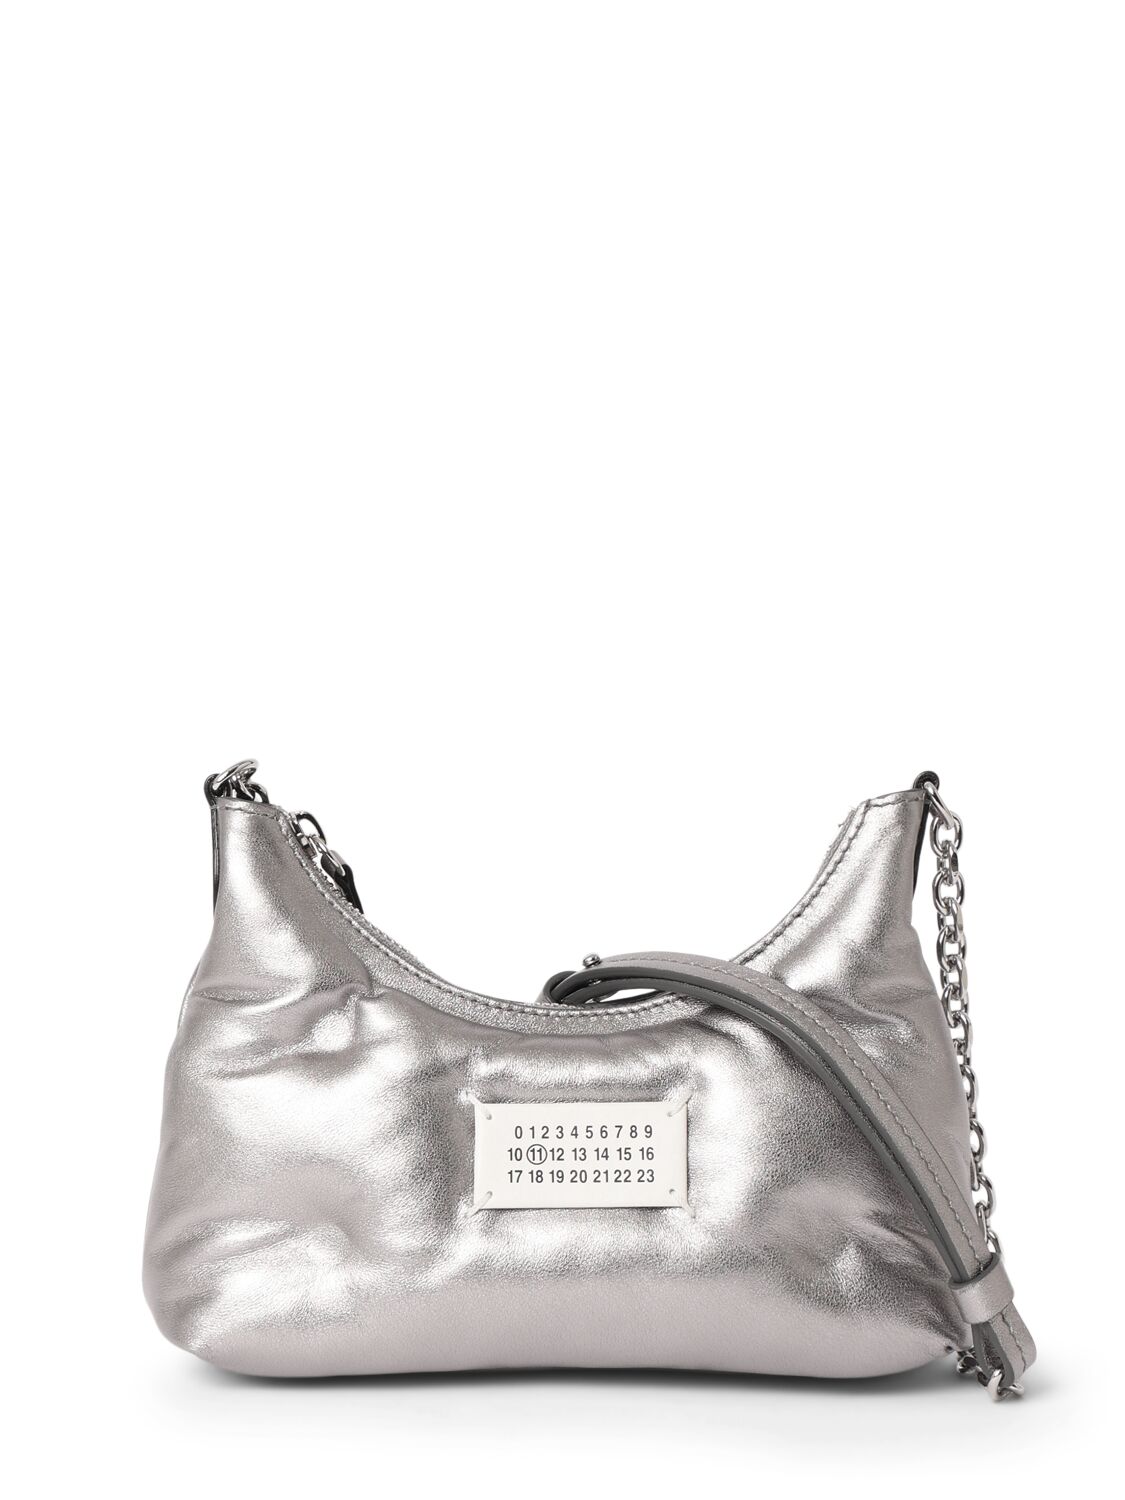 Maison Margiela Micro Glam Slam Hobo Metallized Bag In Metallic